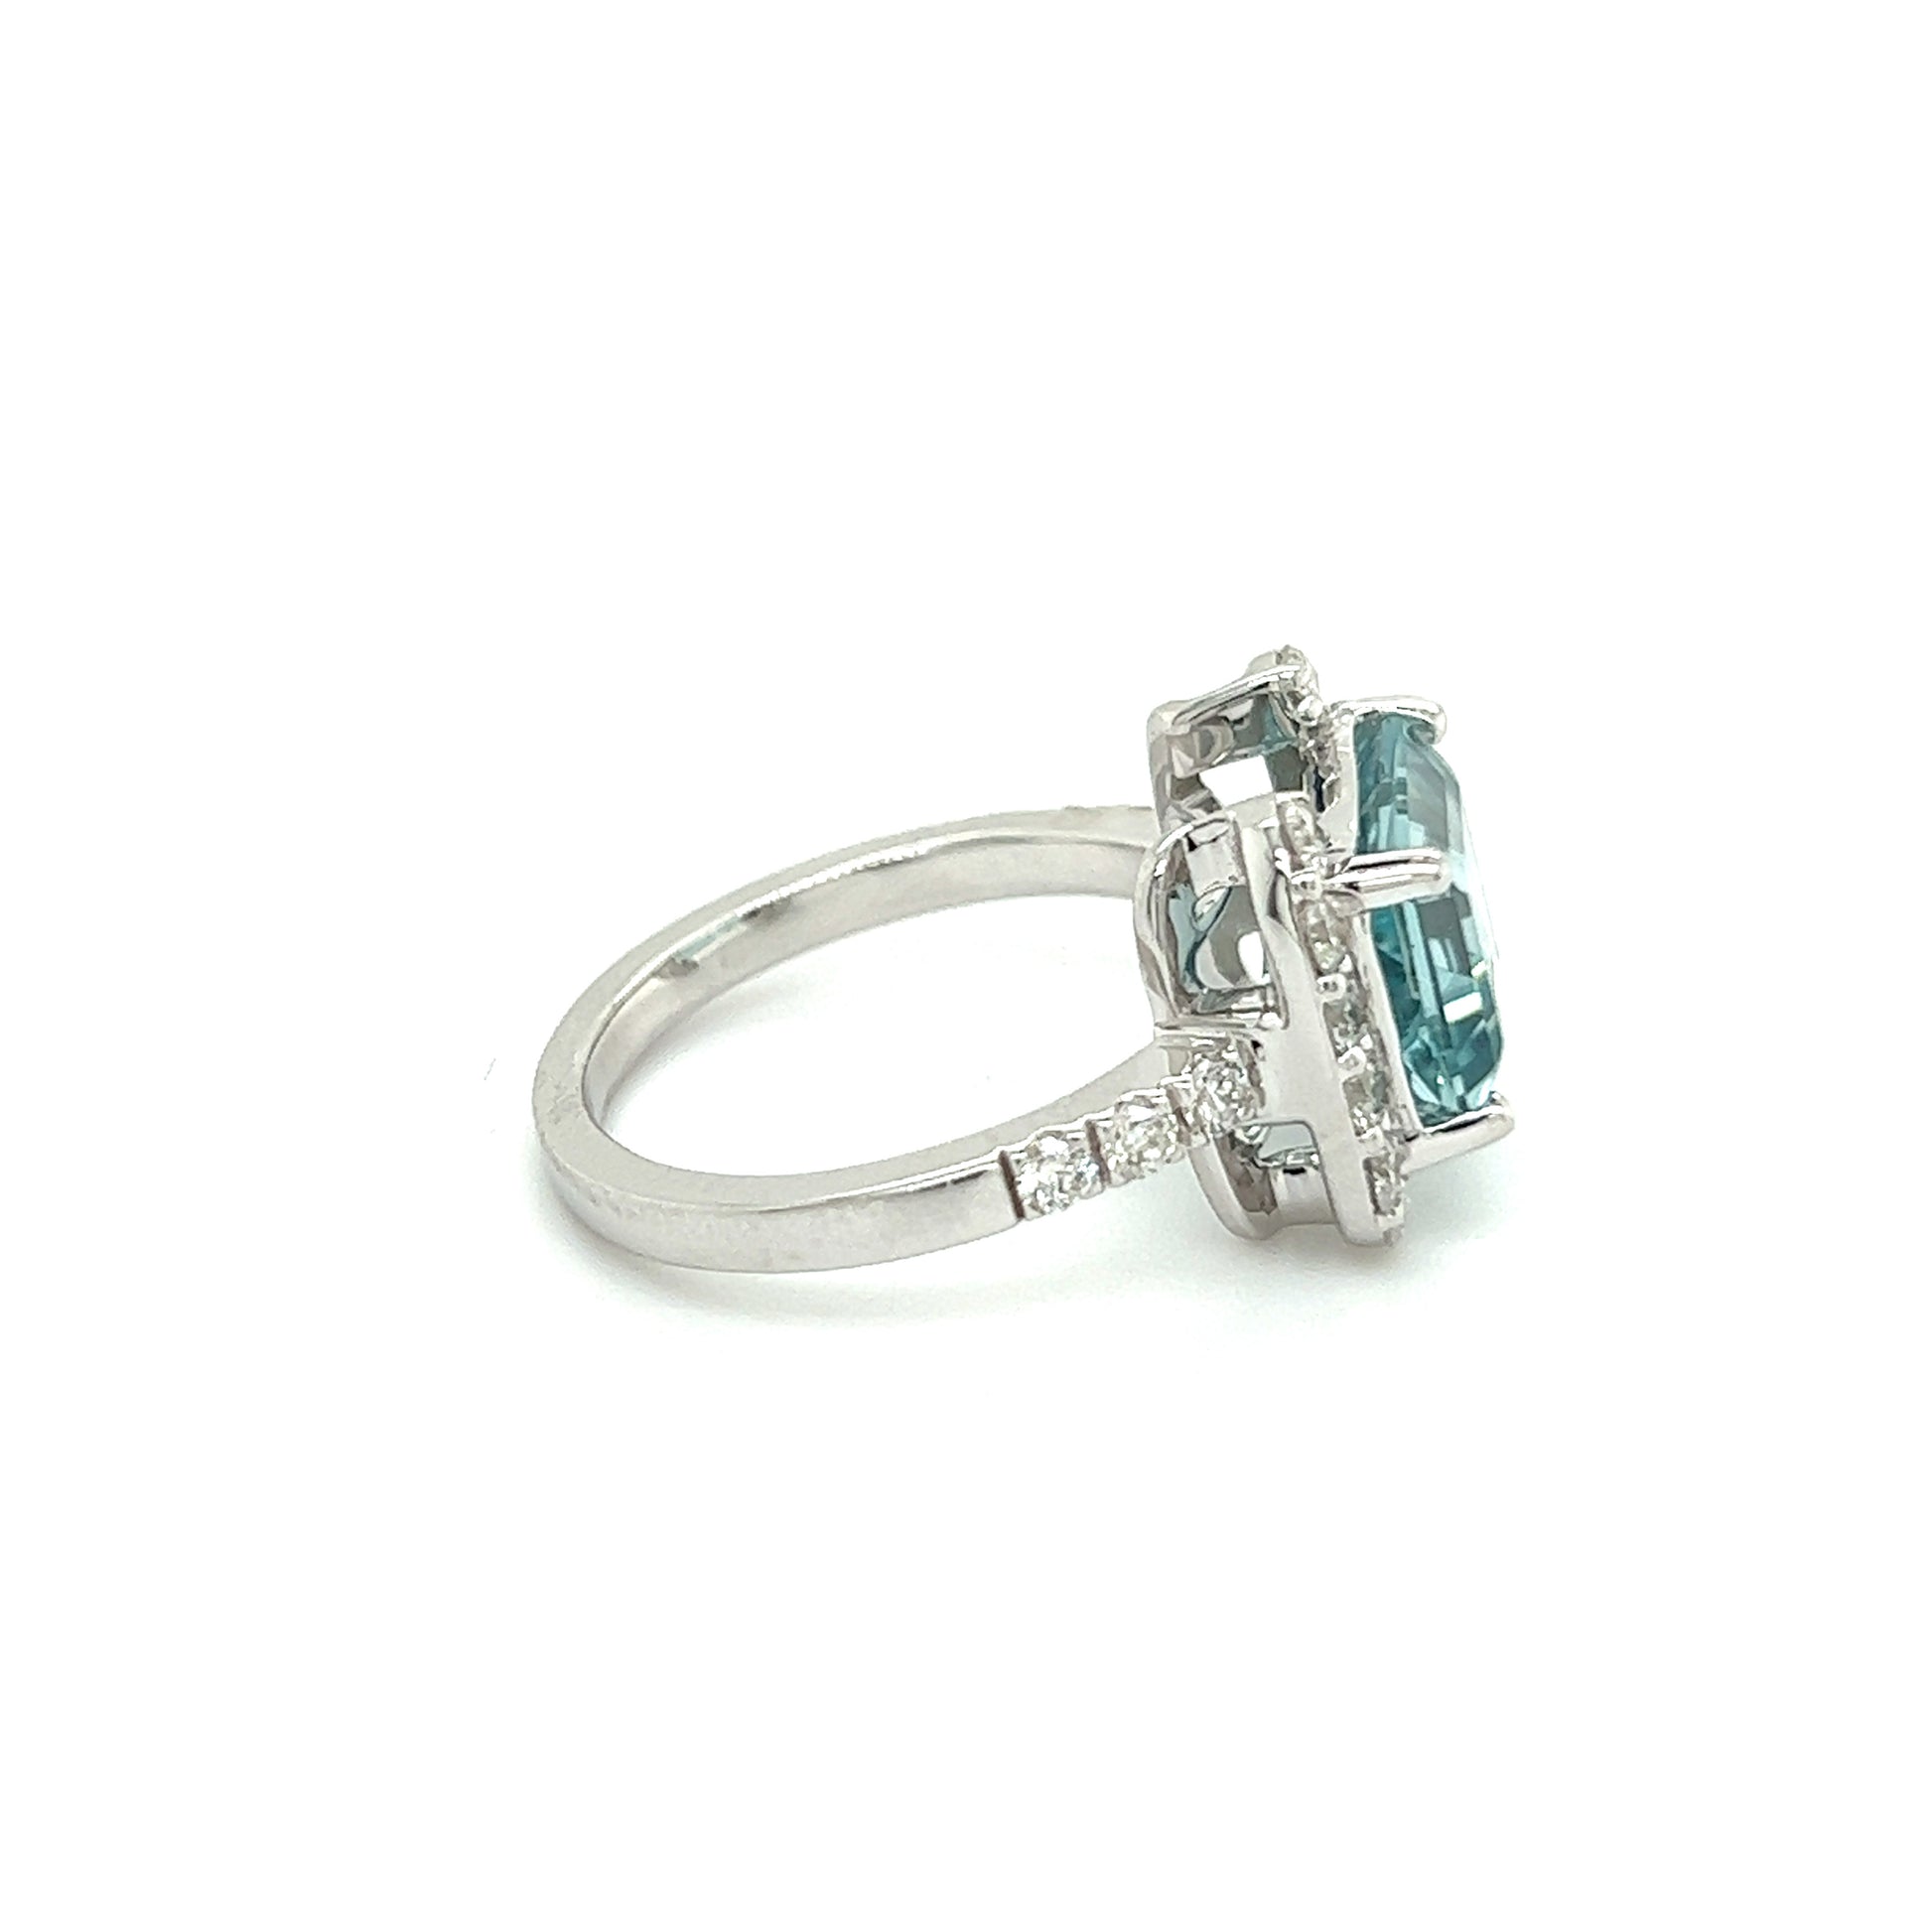 Natural Aquamarine Diamond Ring 14k white Gold 6.09 TCW Certified $4,690 217095